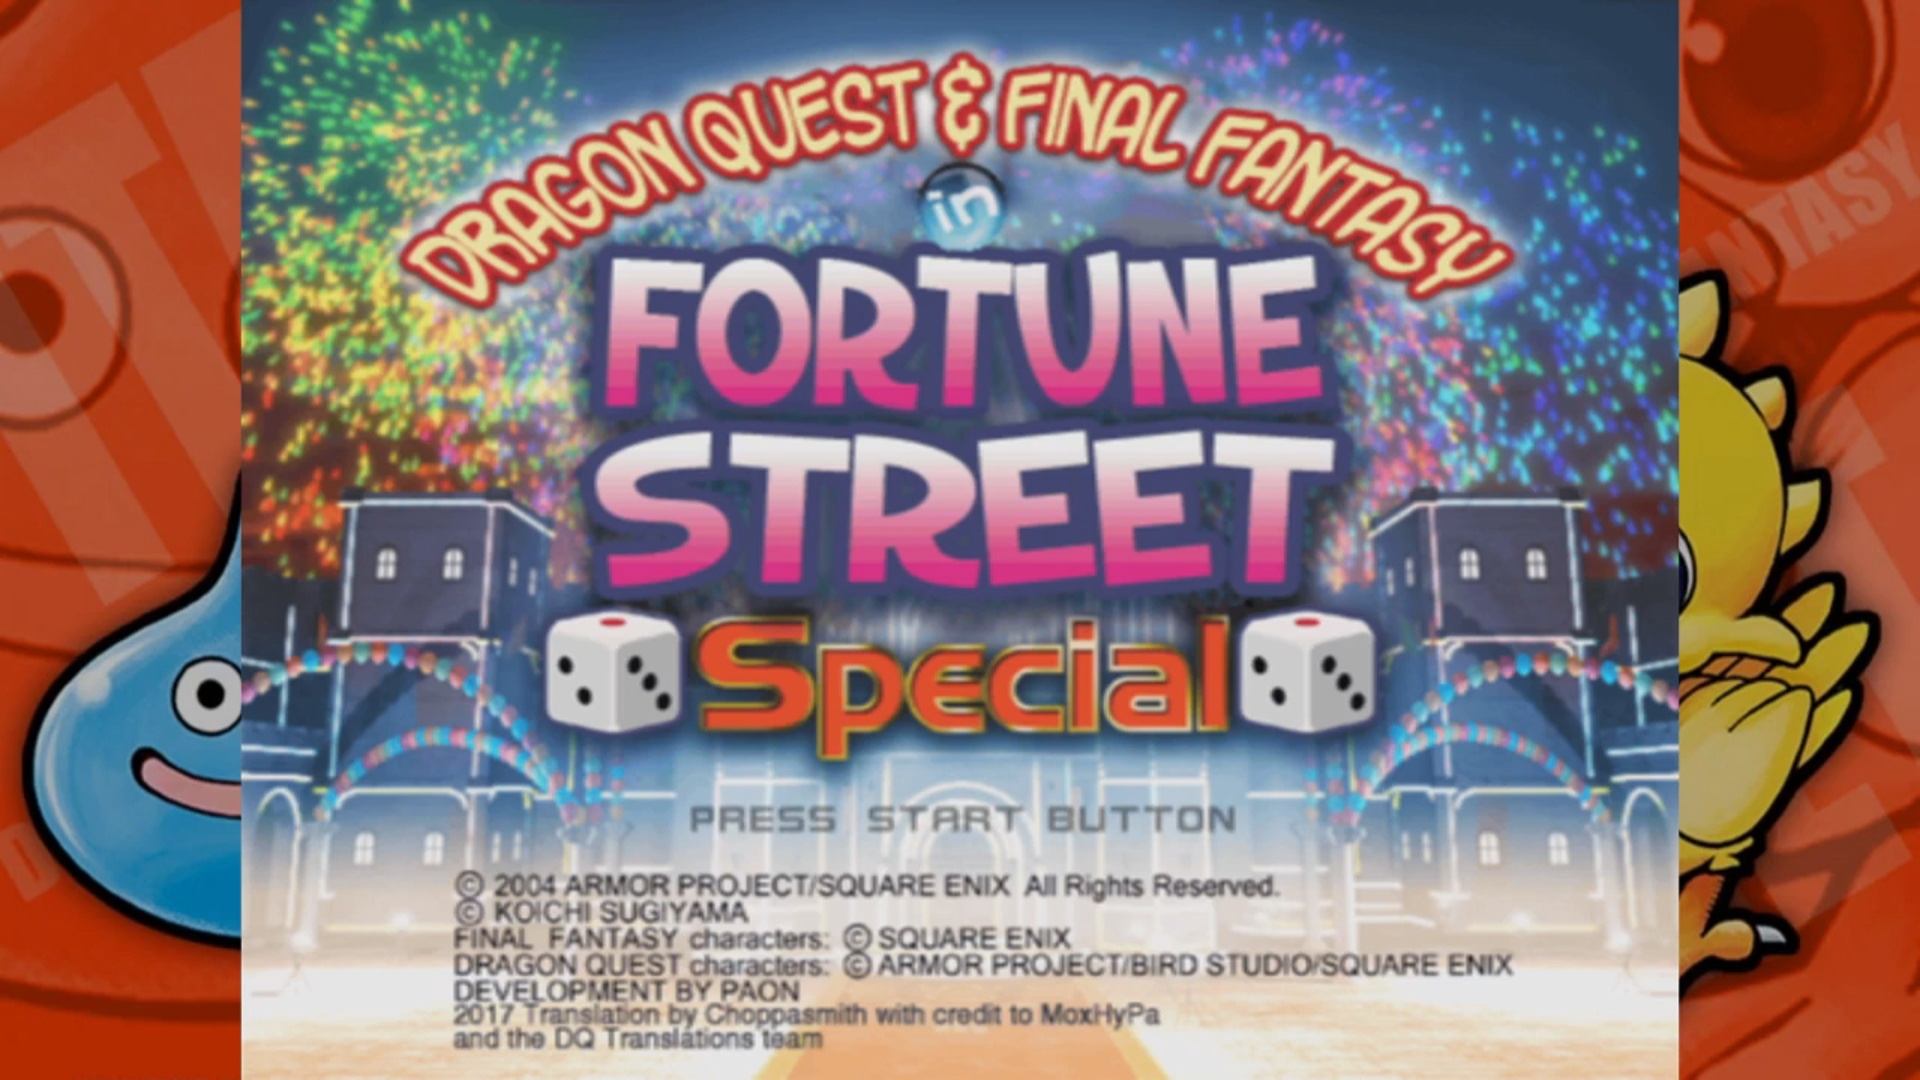 fortune street special yggdrasil 1  forecast calls for light drasils